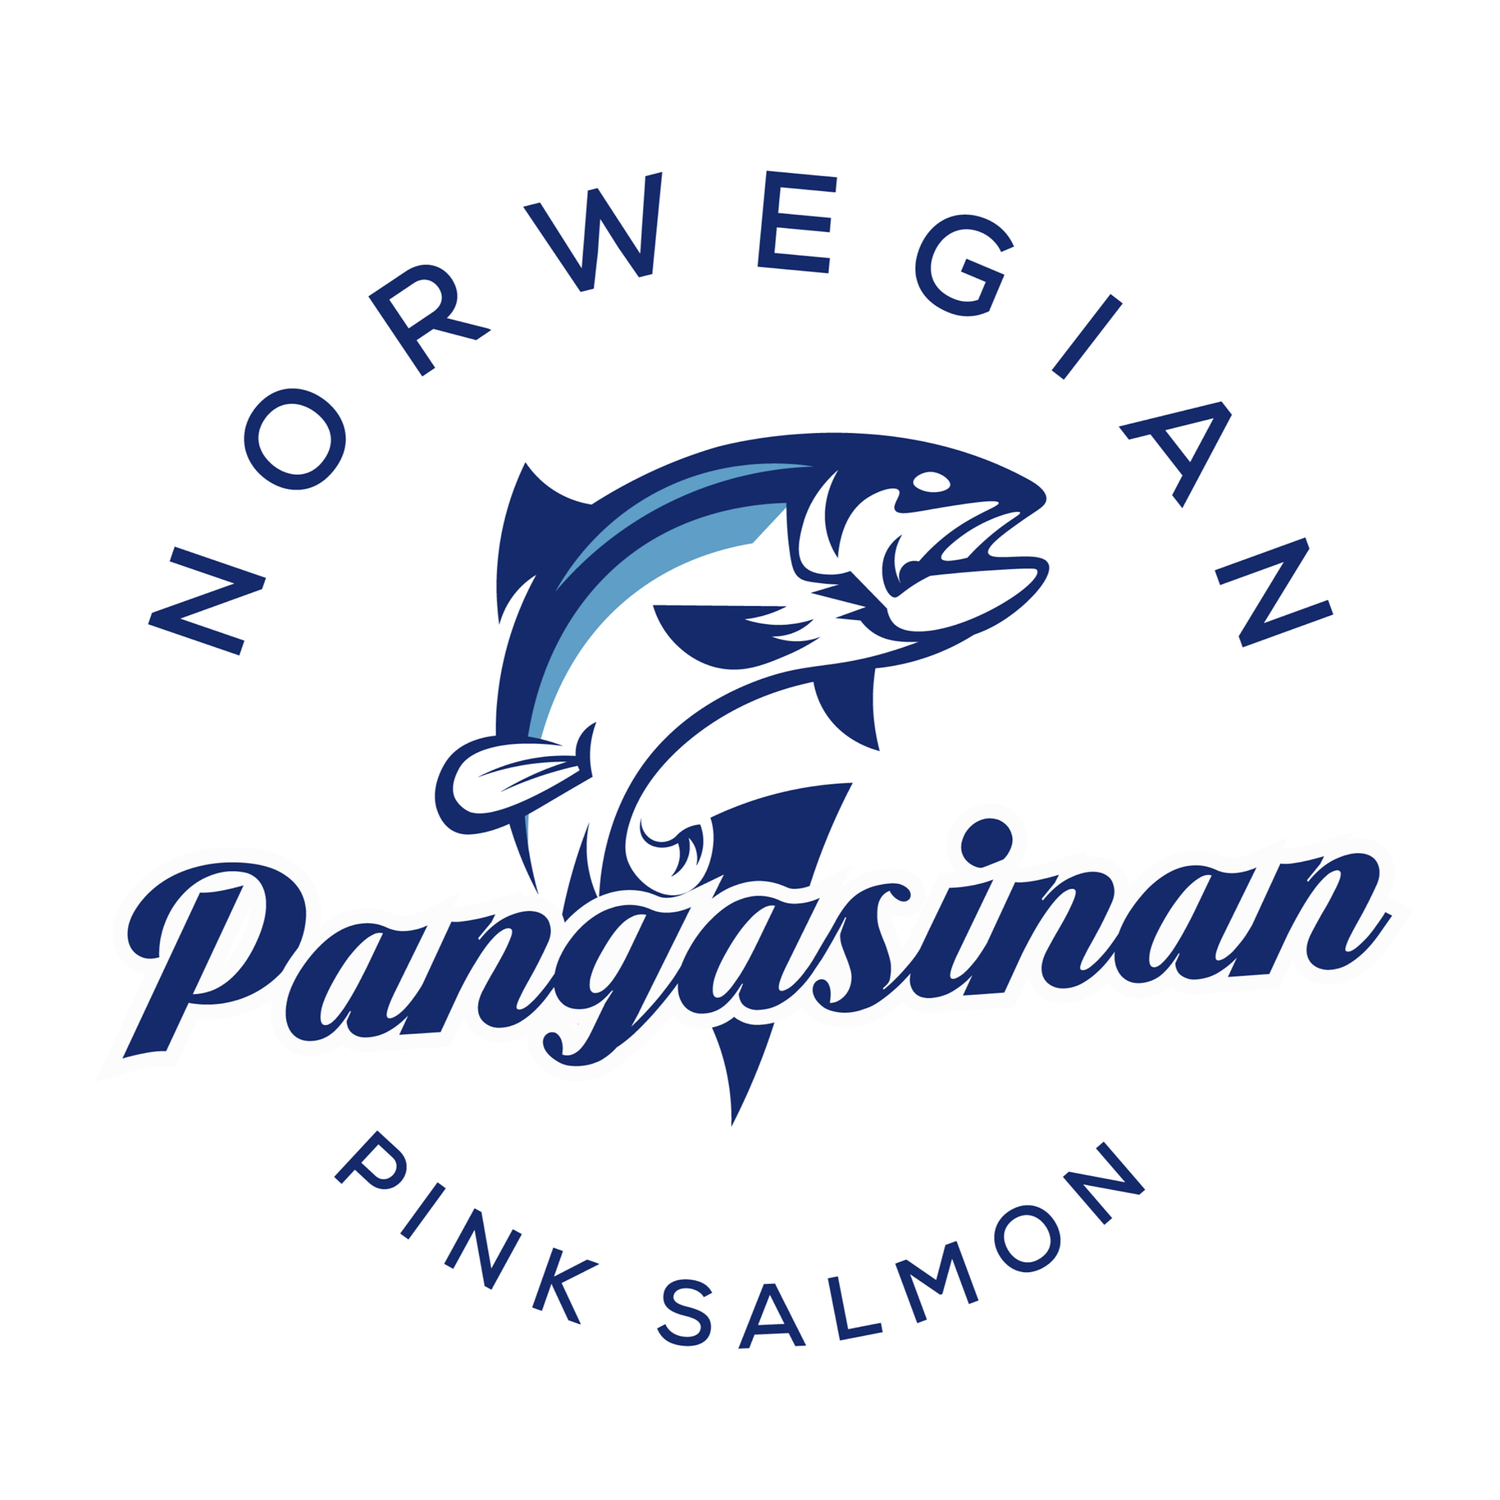 Norwegian Pink Salmon